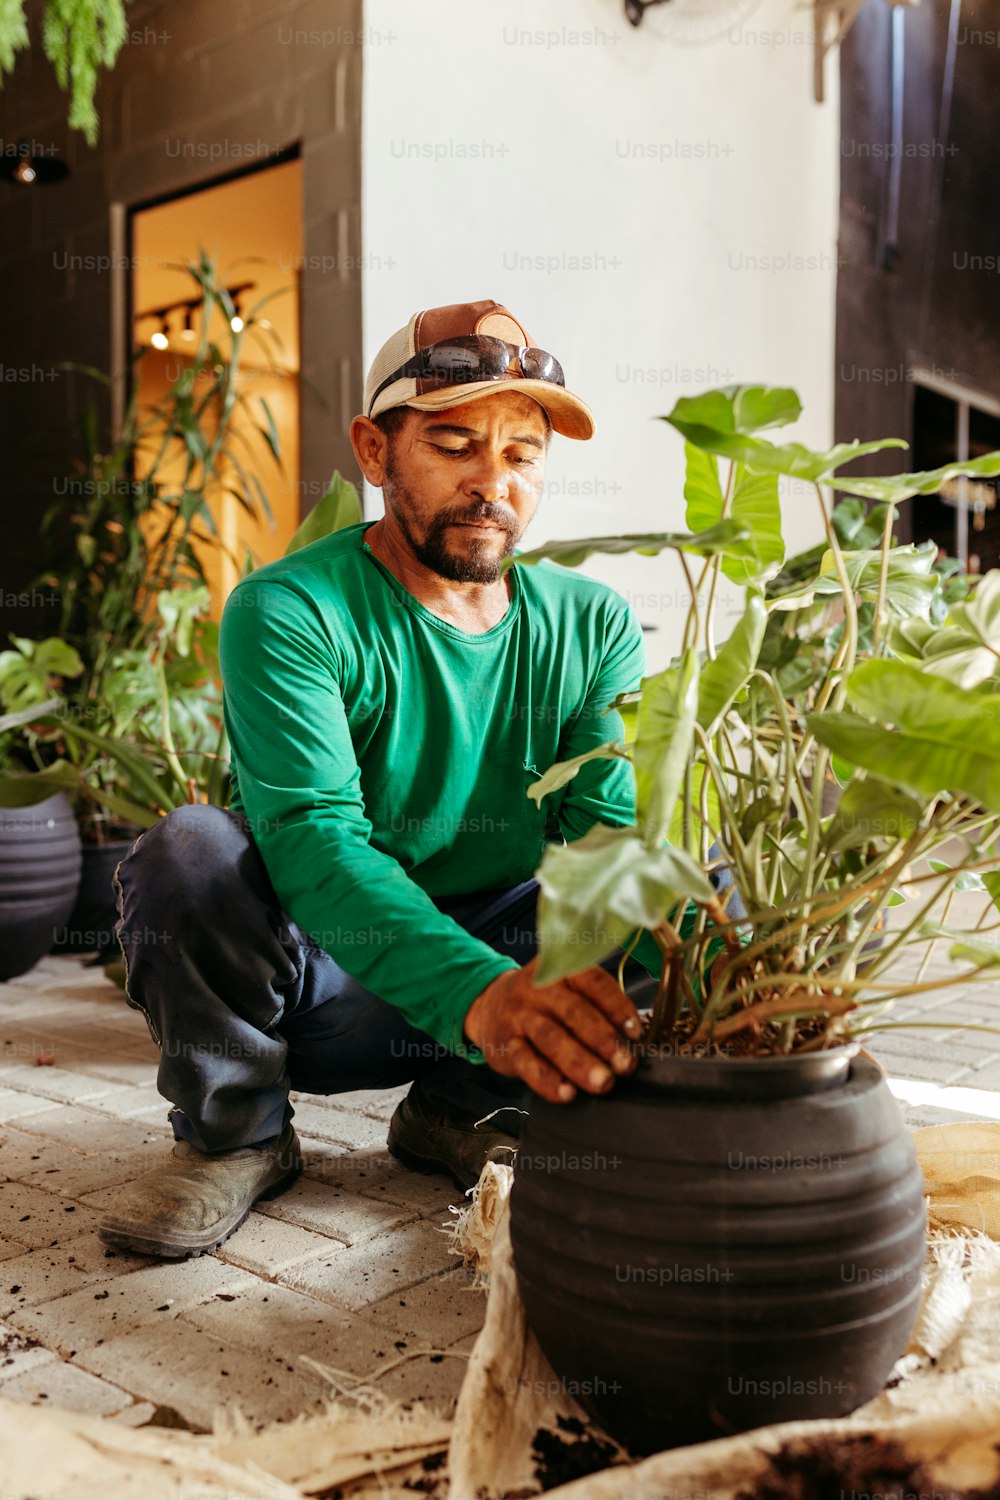 Un uomo inginocchiato accanto a una pianta in vaso